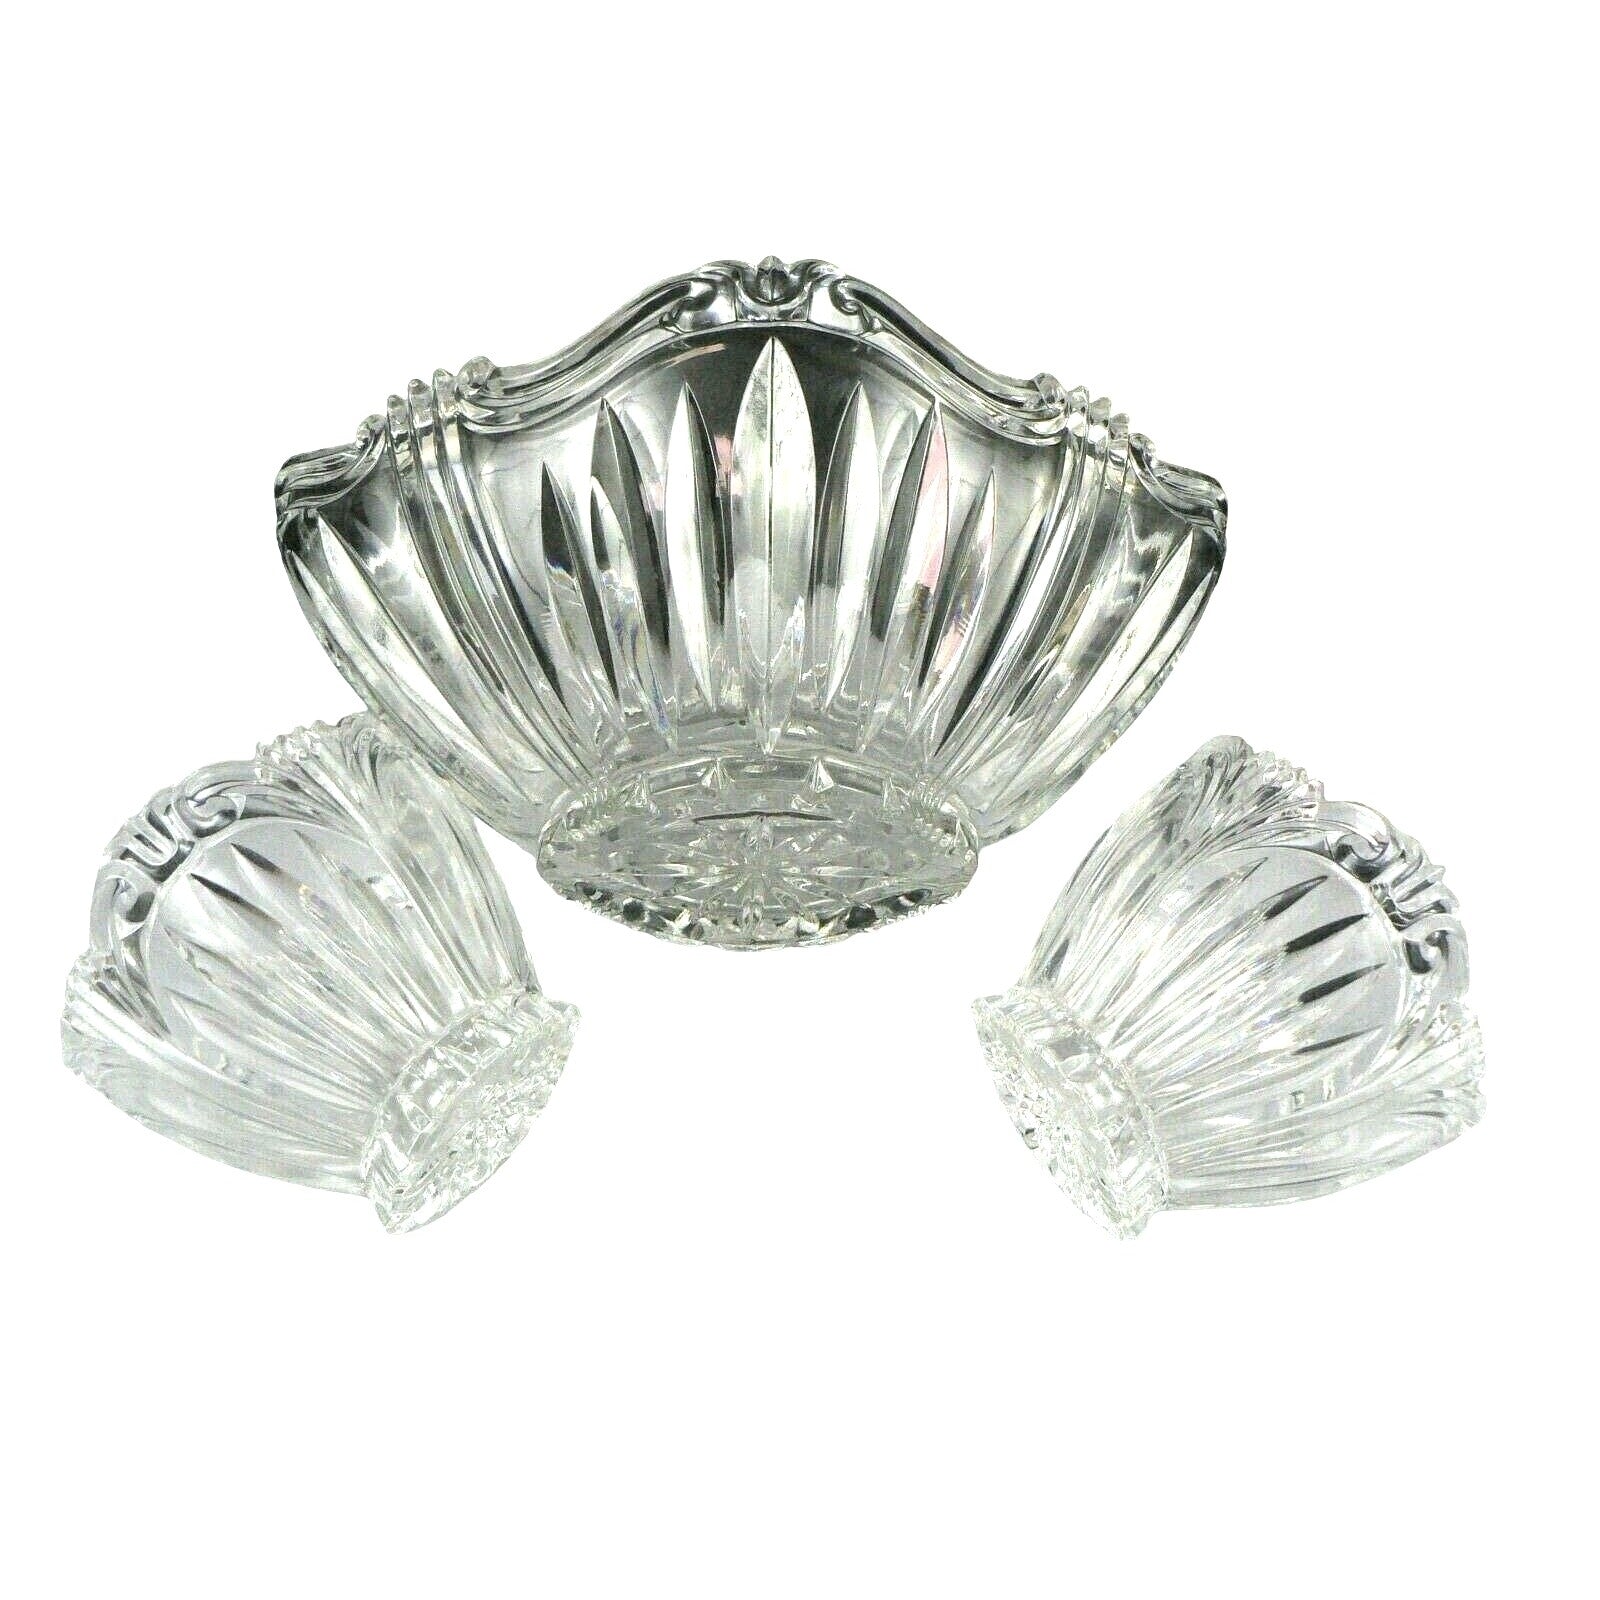 Crystal Bowls Serving Condiment Chip & Dip Oval  3 pc set Scrolled Design